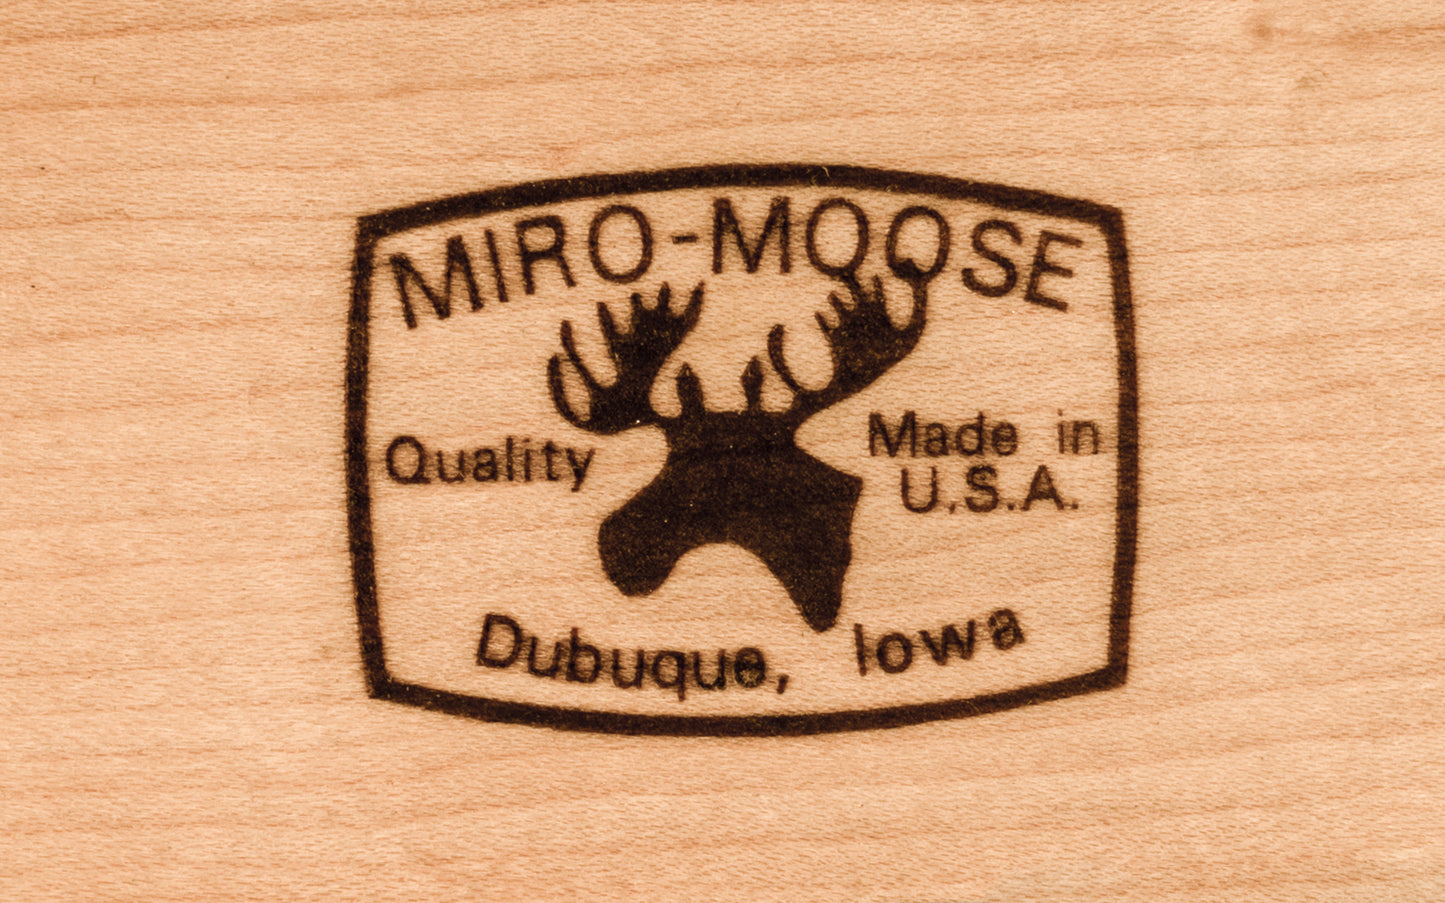 Dubuque "Miro-Moose" 8" x 4-1/2" Wooden Cam Clamp